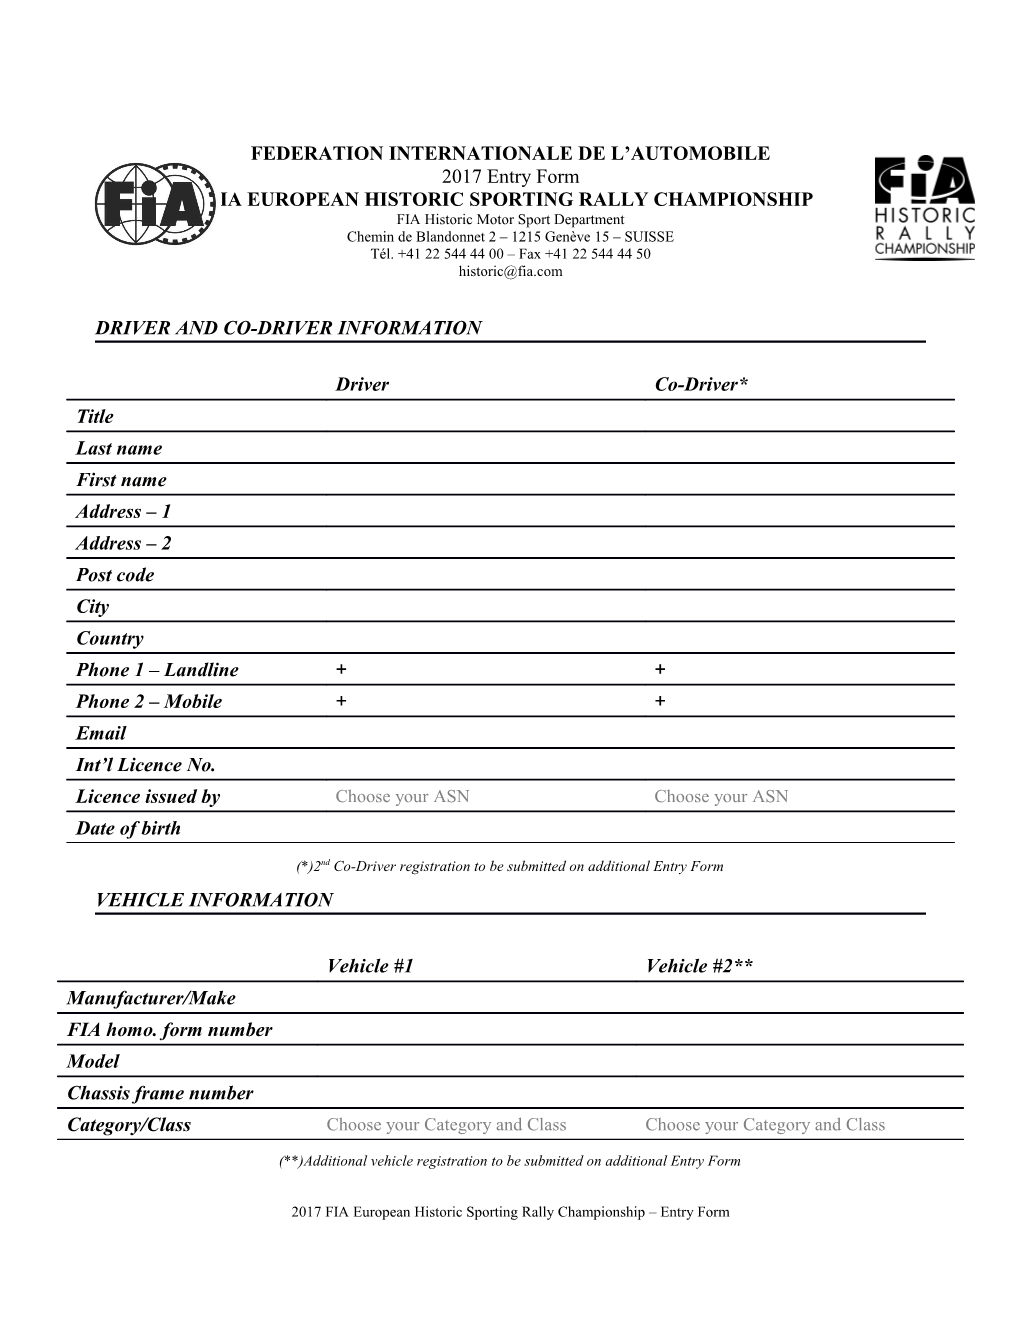 FIA European Historic Sporting Rally Championship